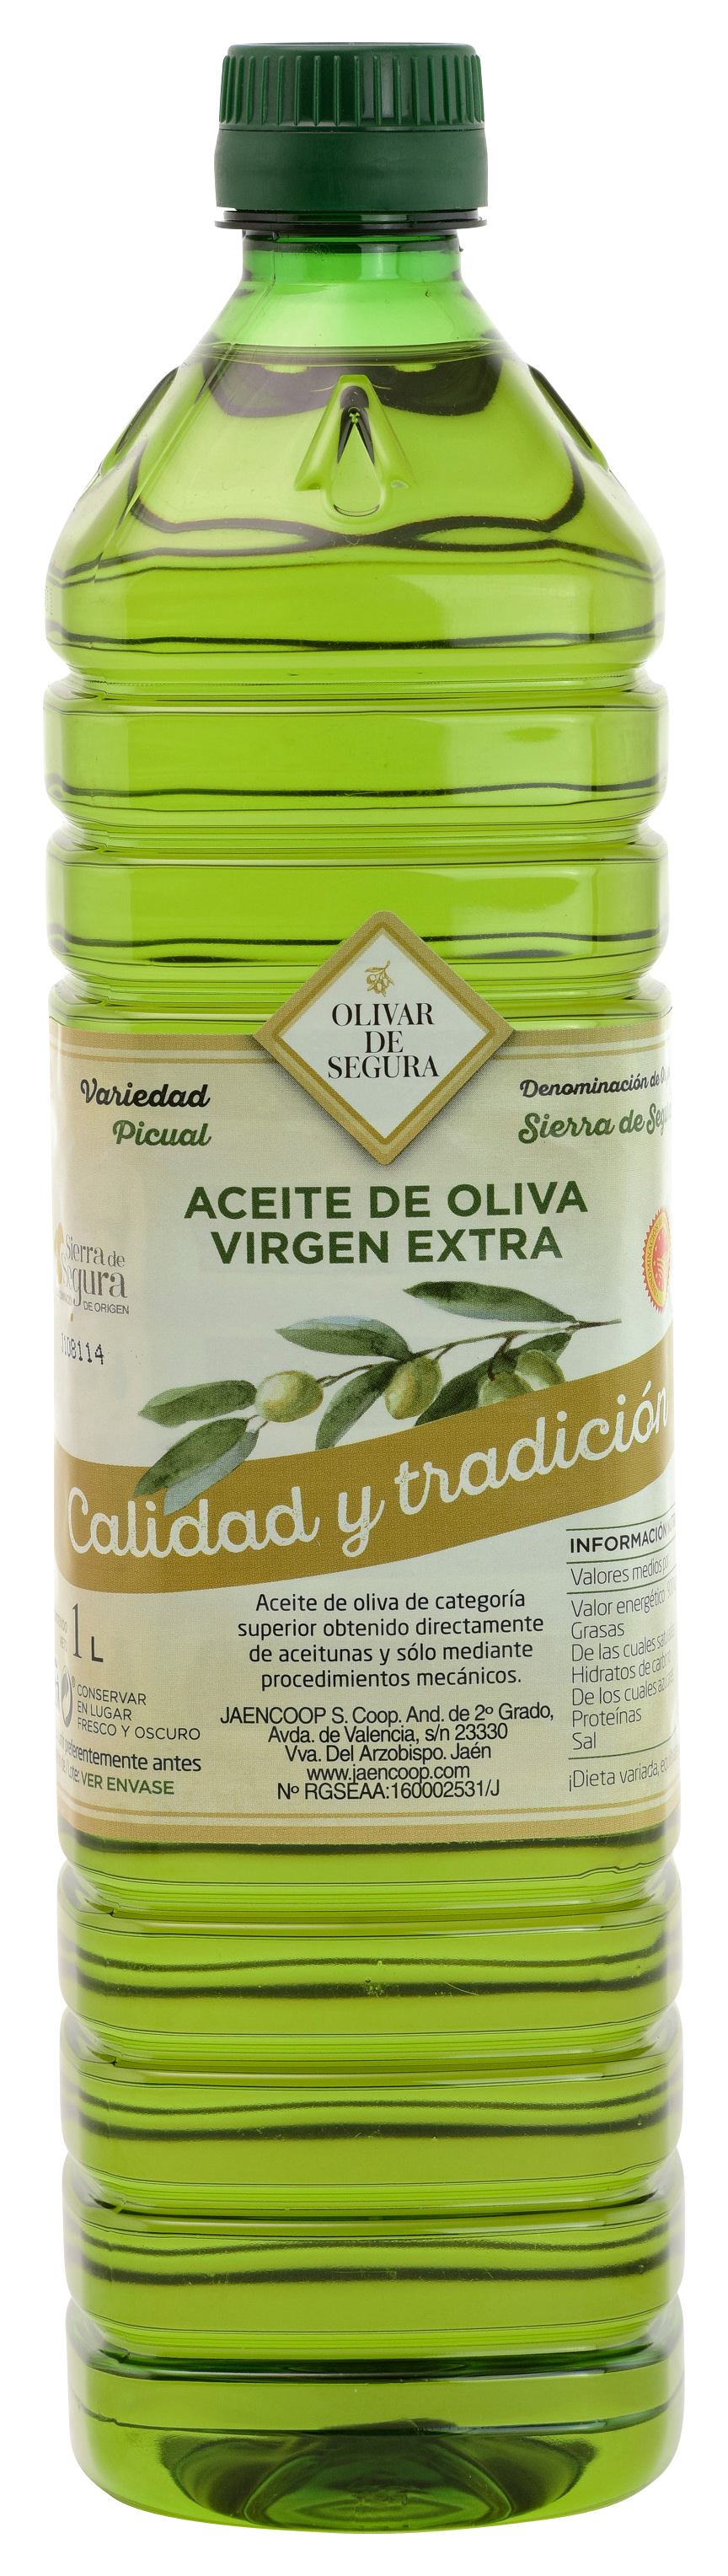 ACEITE DE OLIVA VIRGEN EXTRA